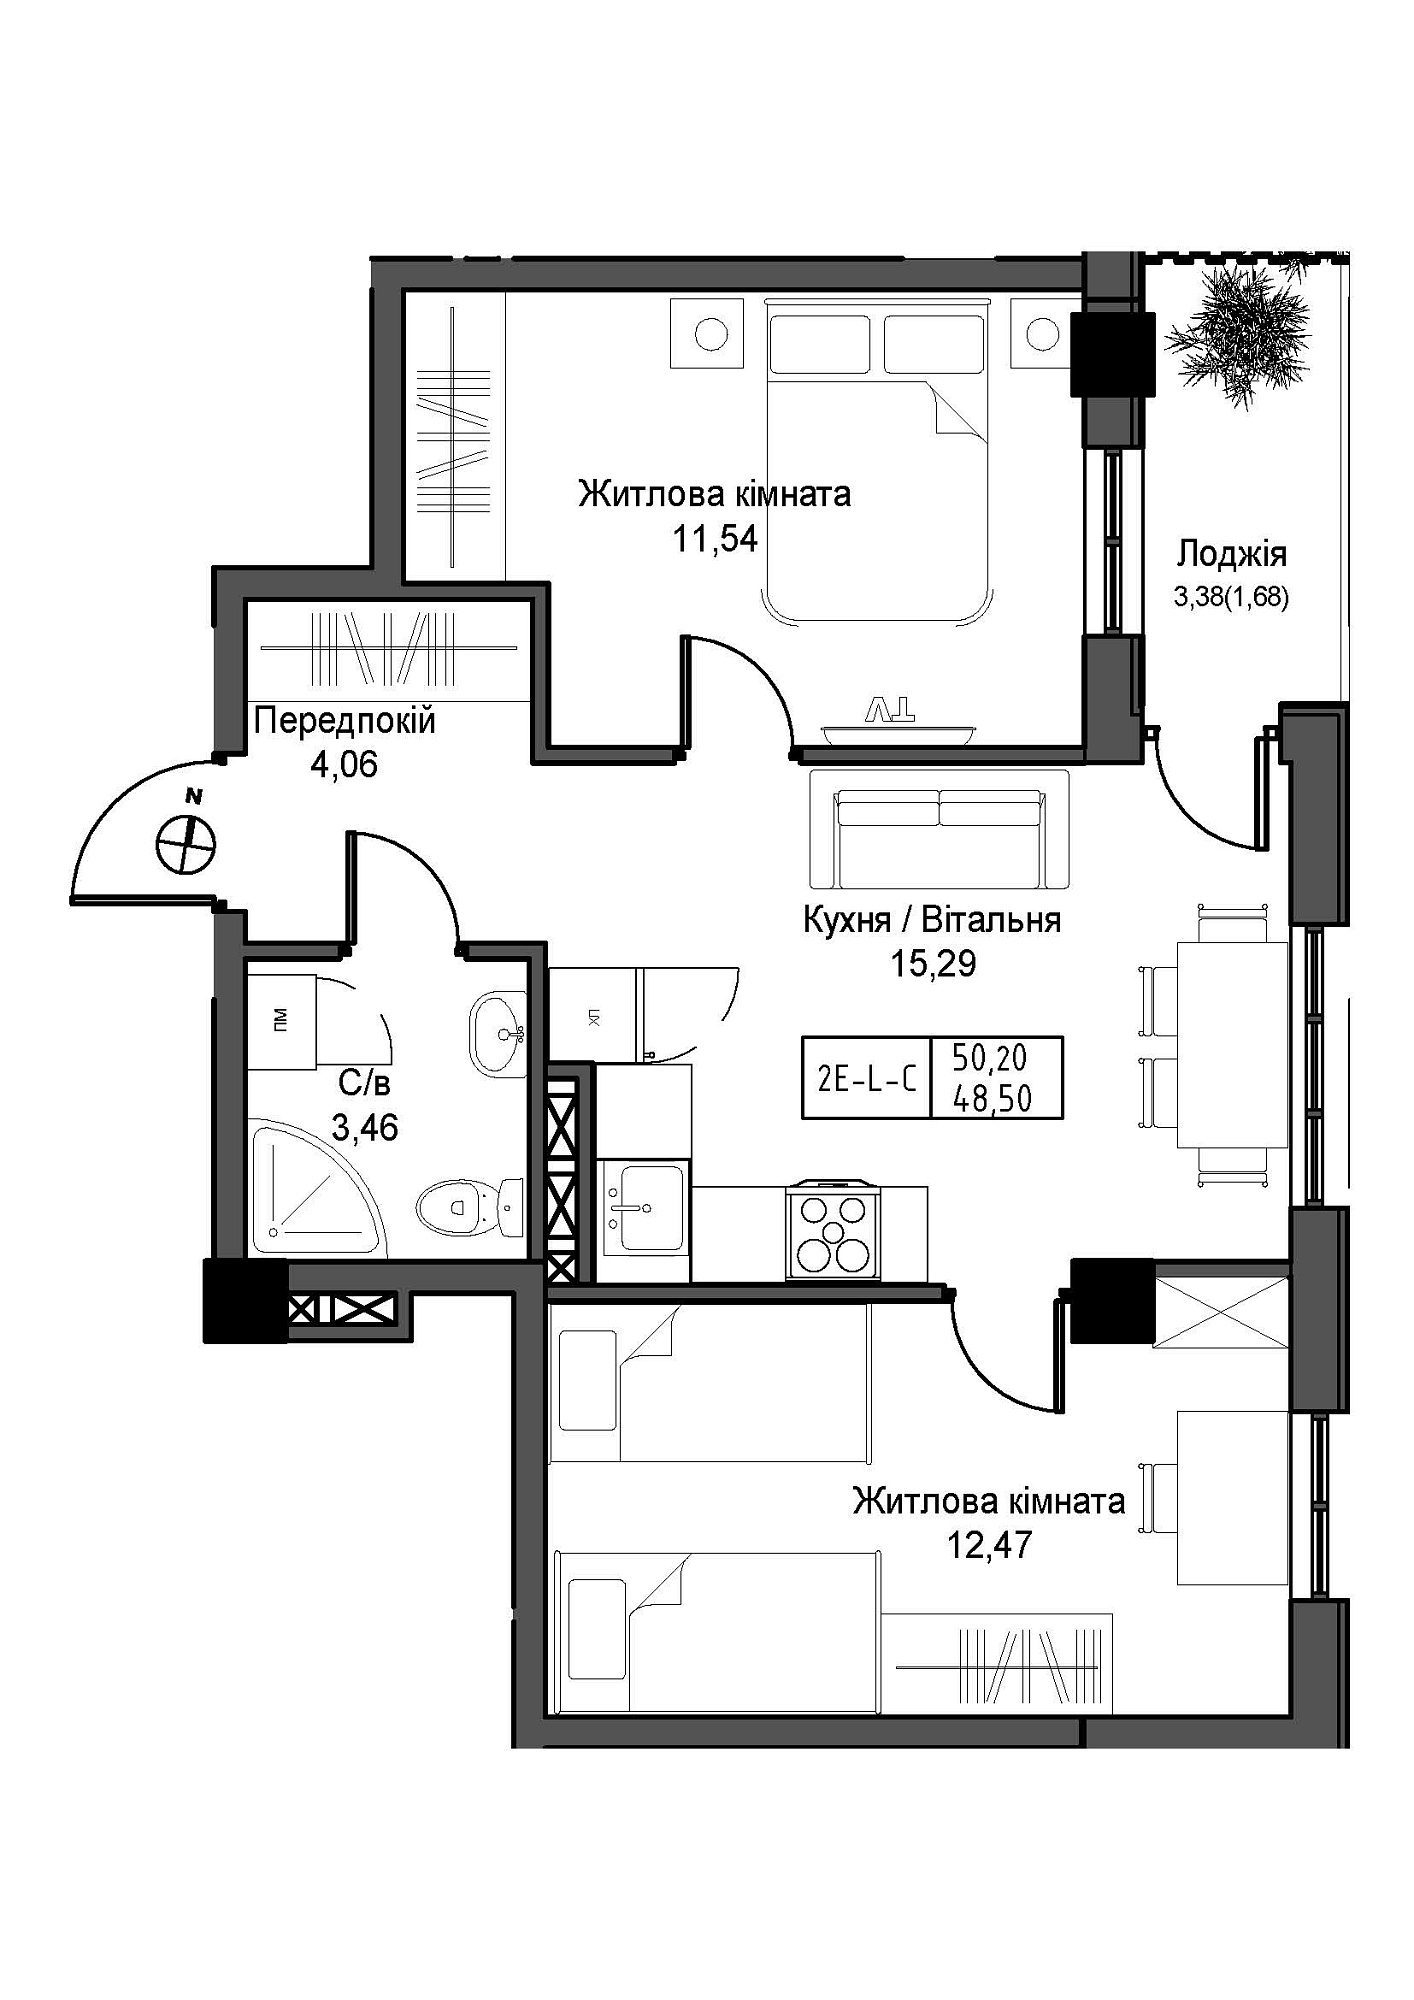 Планування 2-к квартира площею 48.5м2, UM-007-08/0007.